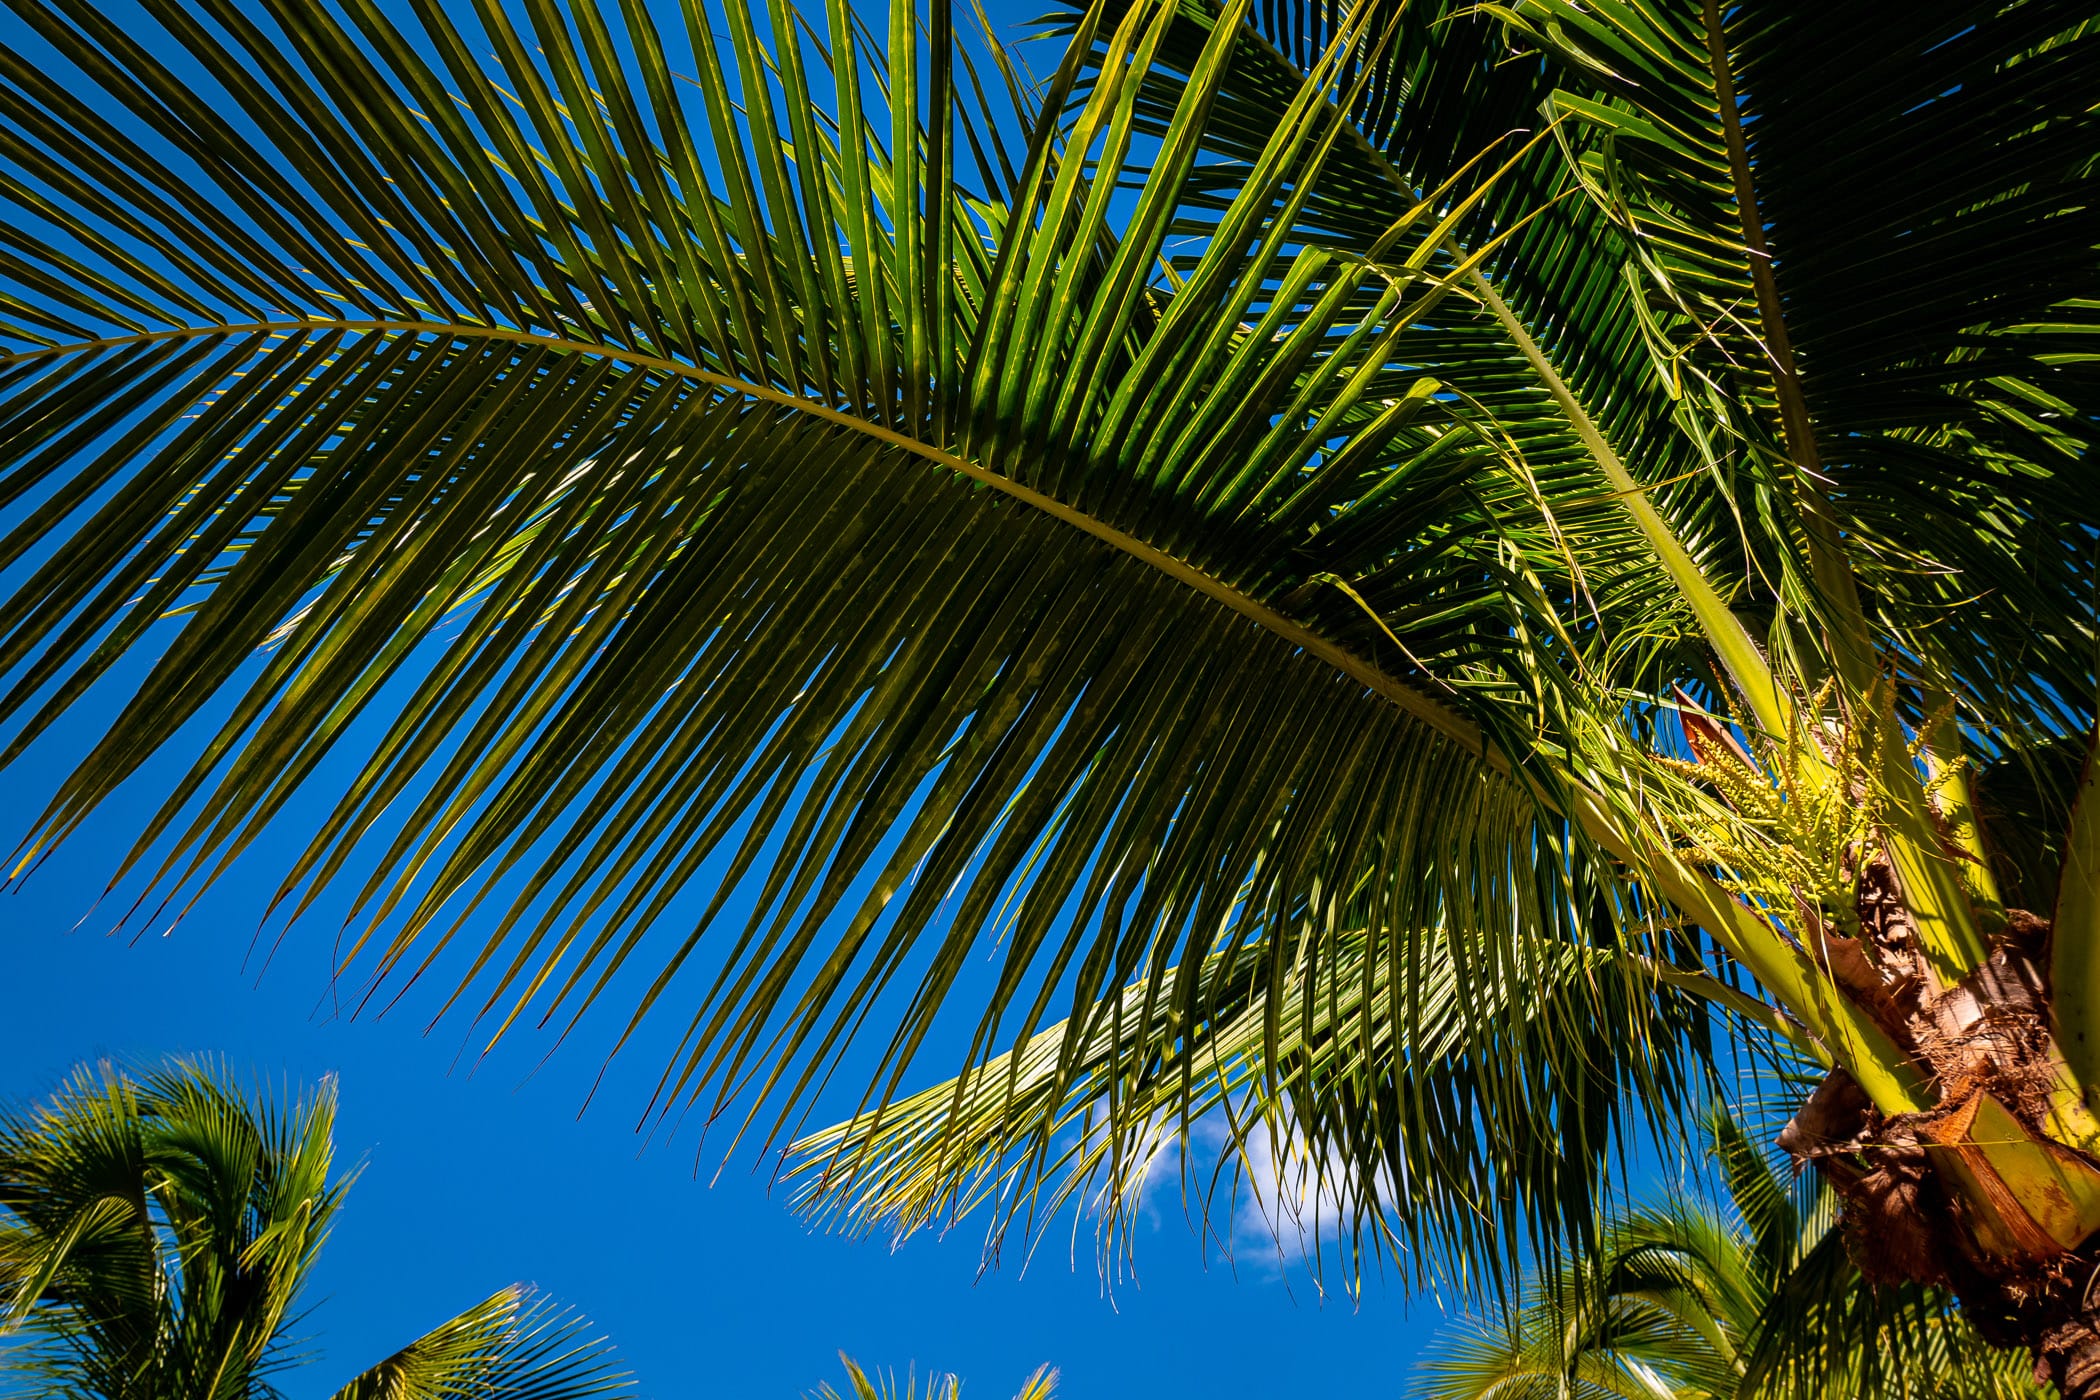 Palm fronds arc across the blue sky over Cozumel, Mexico.